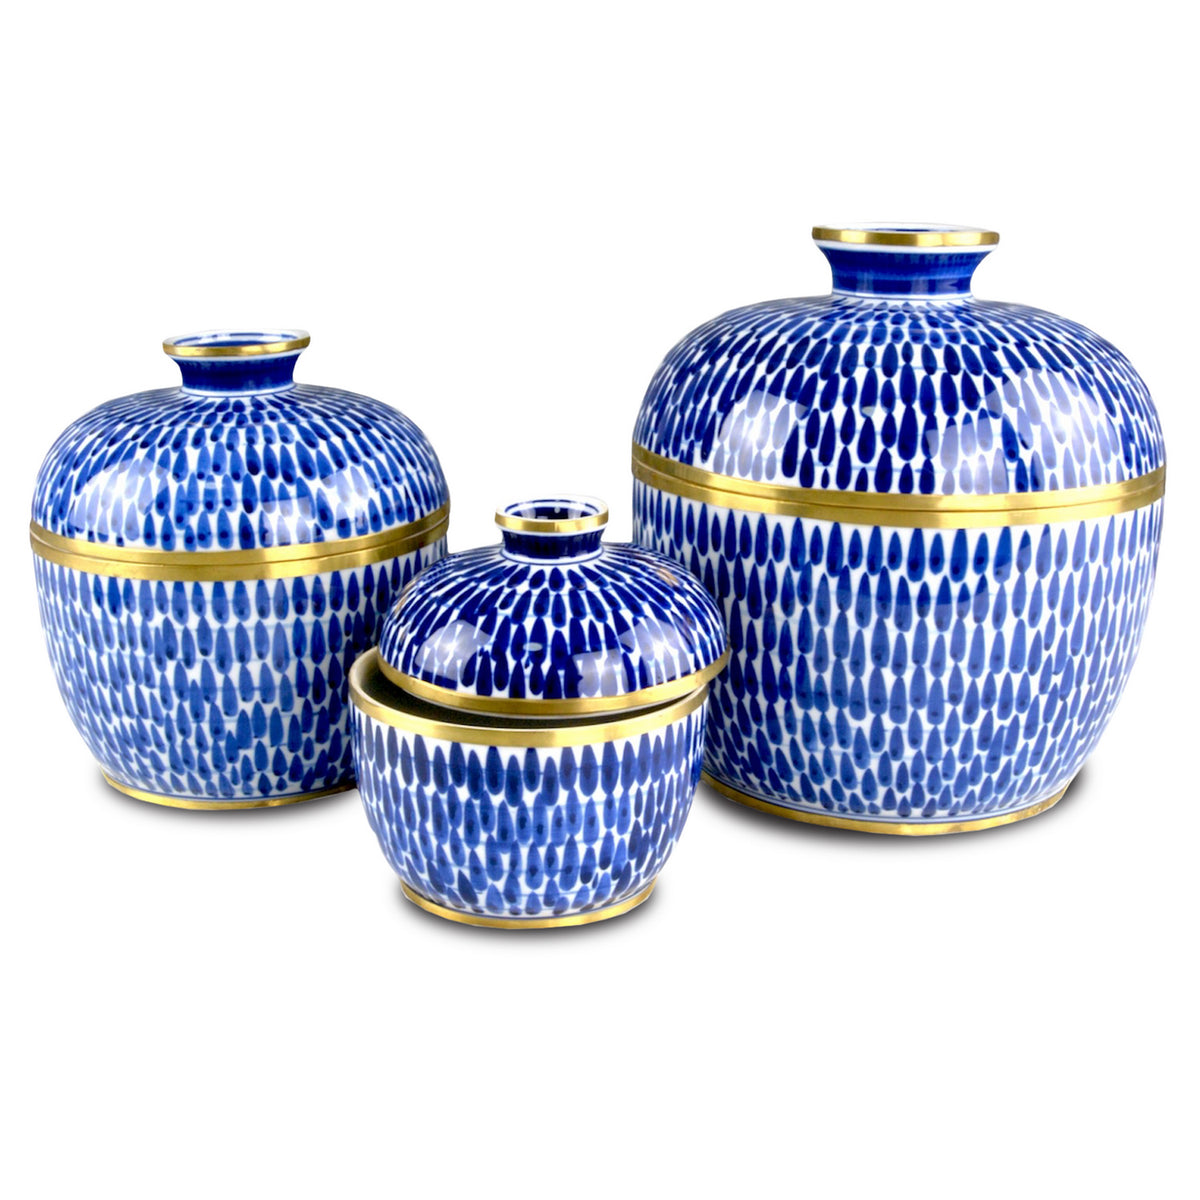 Currey and Company - 1200-0661 - Jar Set of 3 - Plavan - Blue/White/Brass